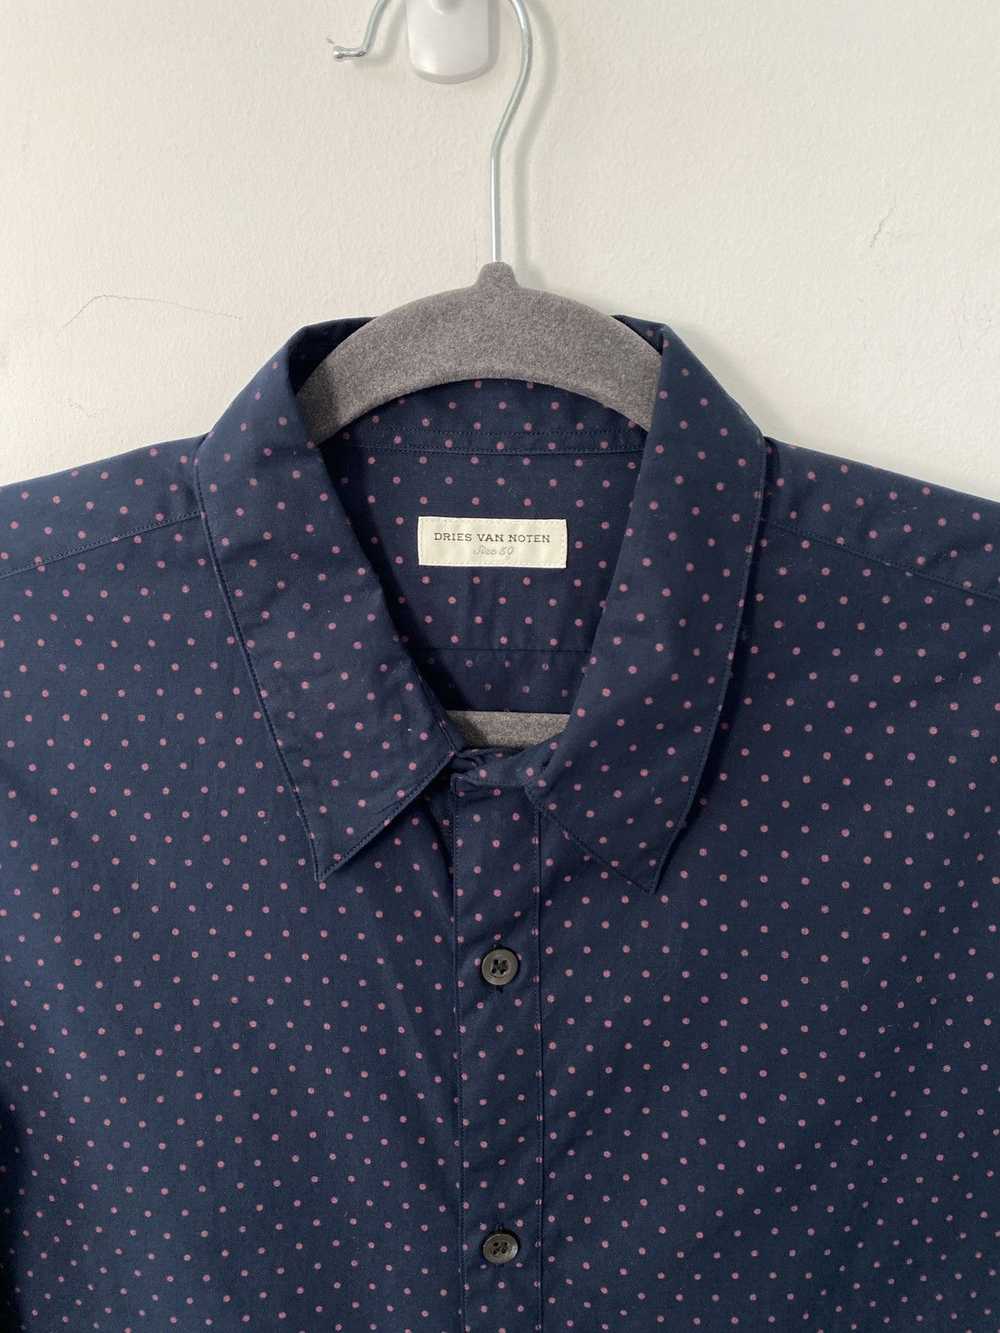 Dries Van Noten Navy Cotton Polka Dot Shirt - image 2